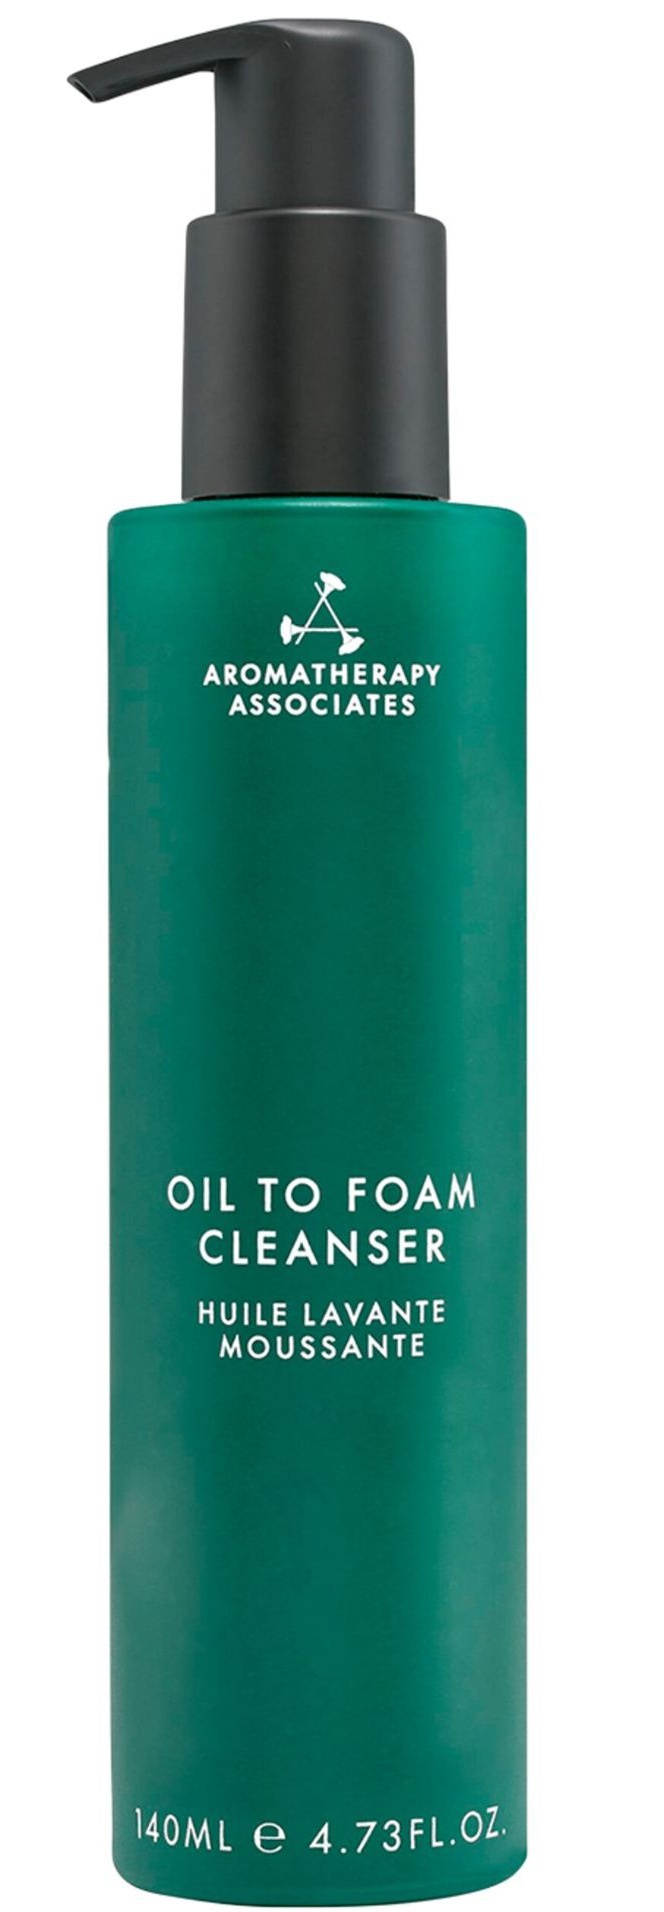 Aromatherapy Associates Oil To Foam Cleanser